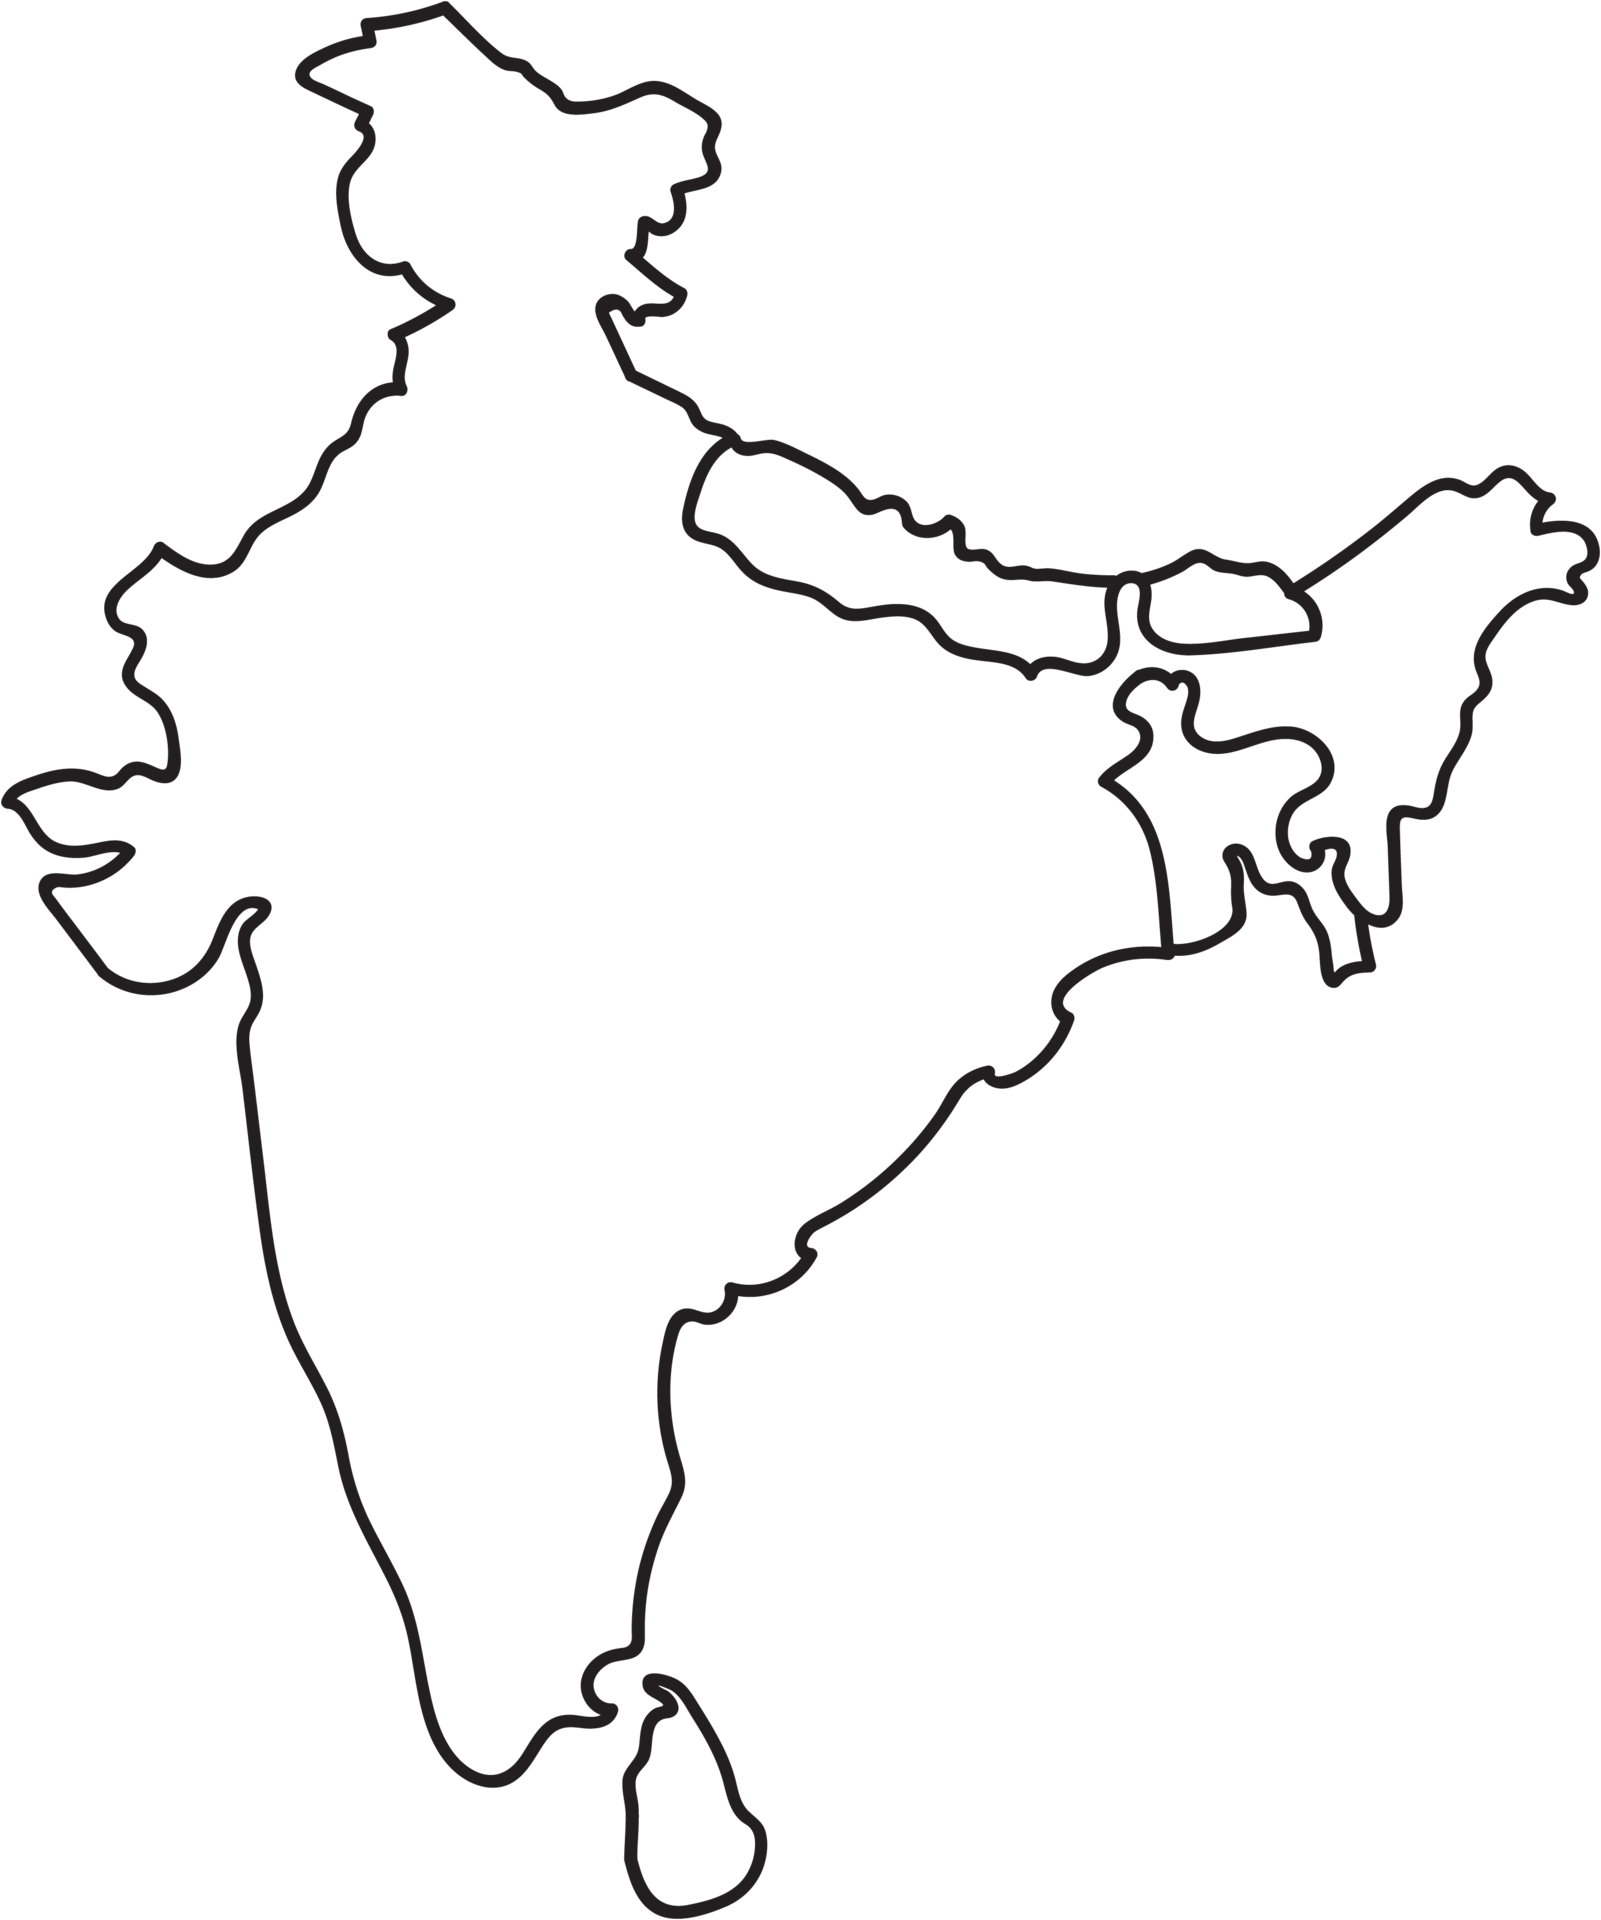 Stylish black and white icon map of india Vector Image